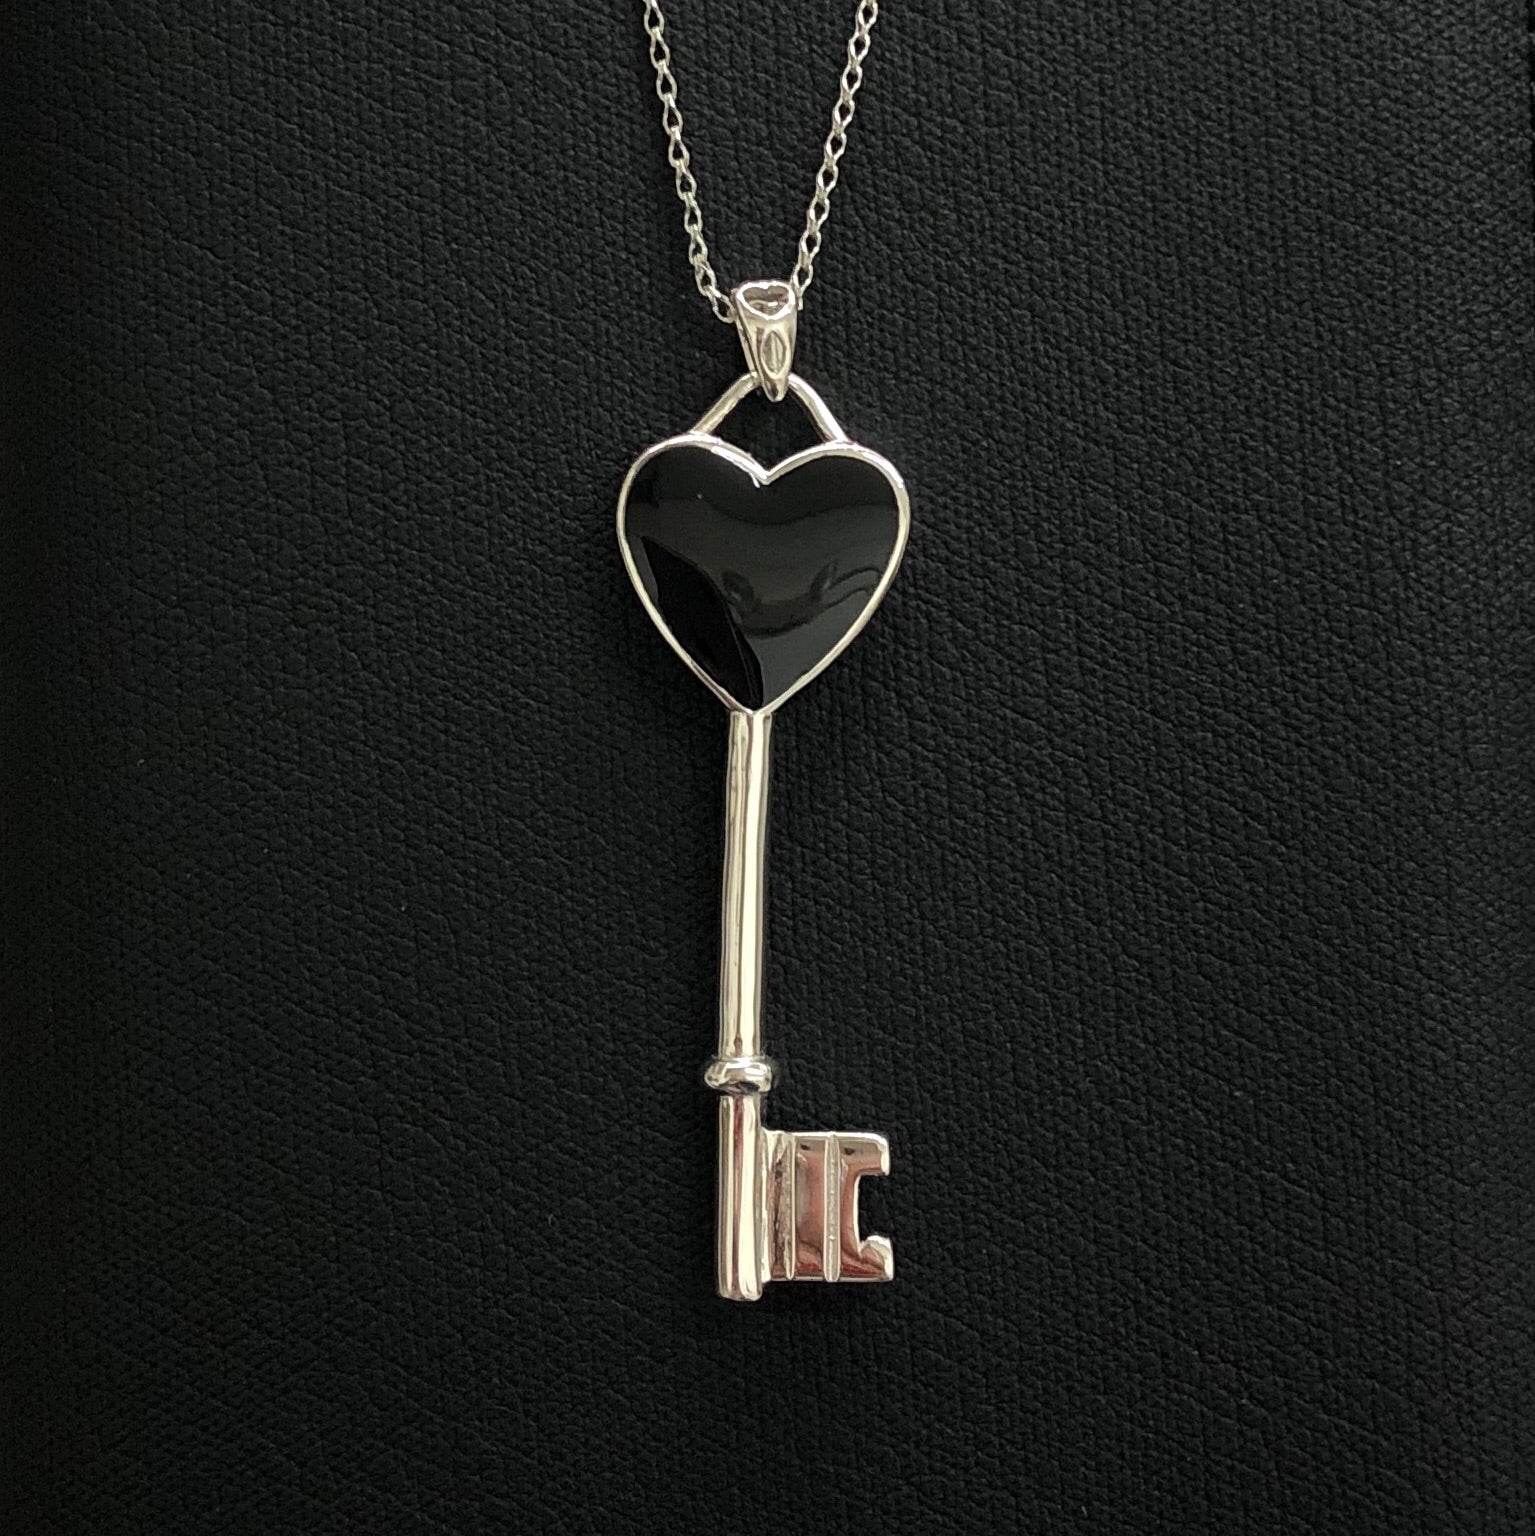 tiffany black key necklace